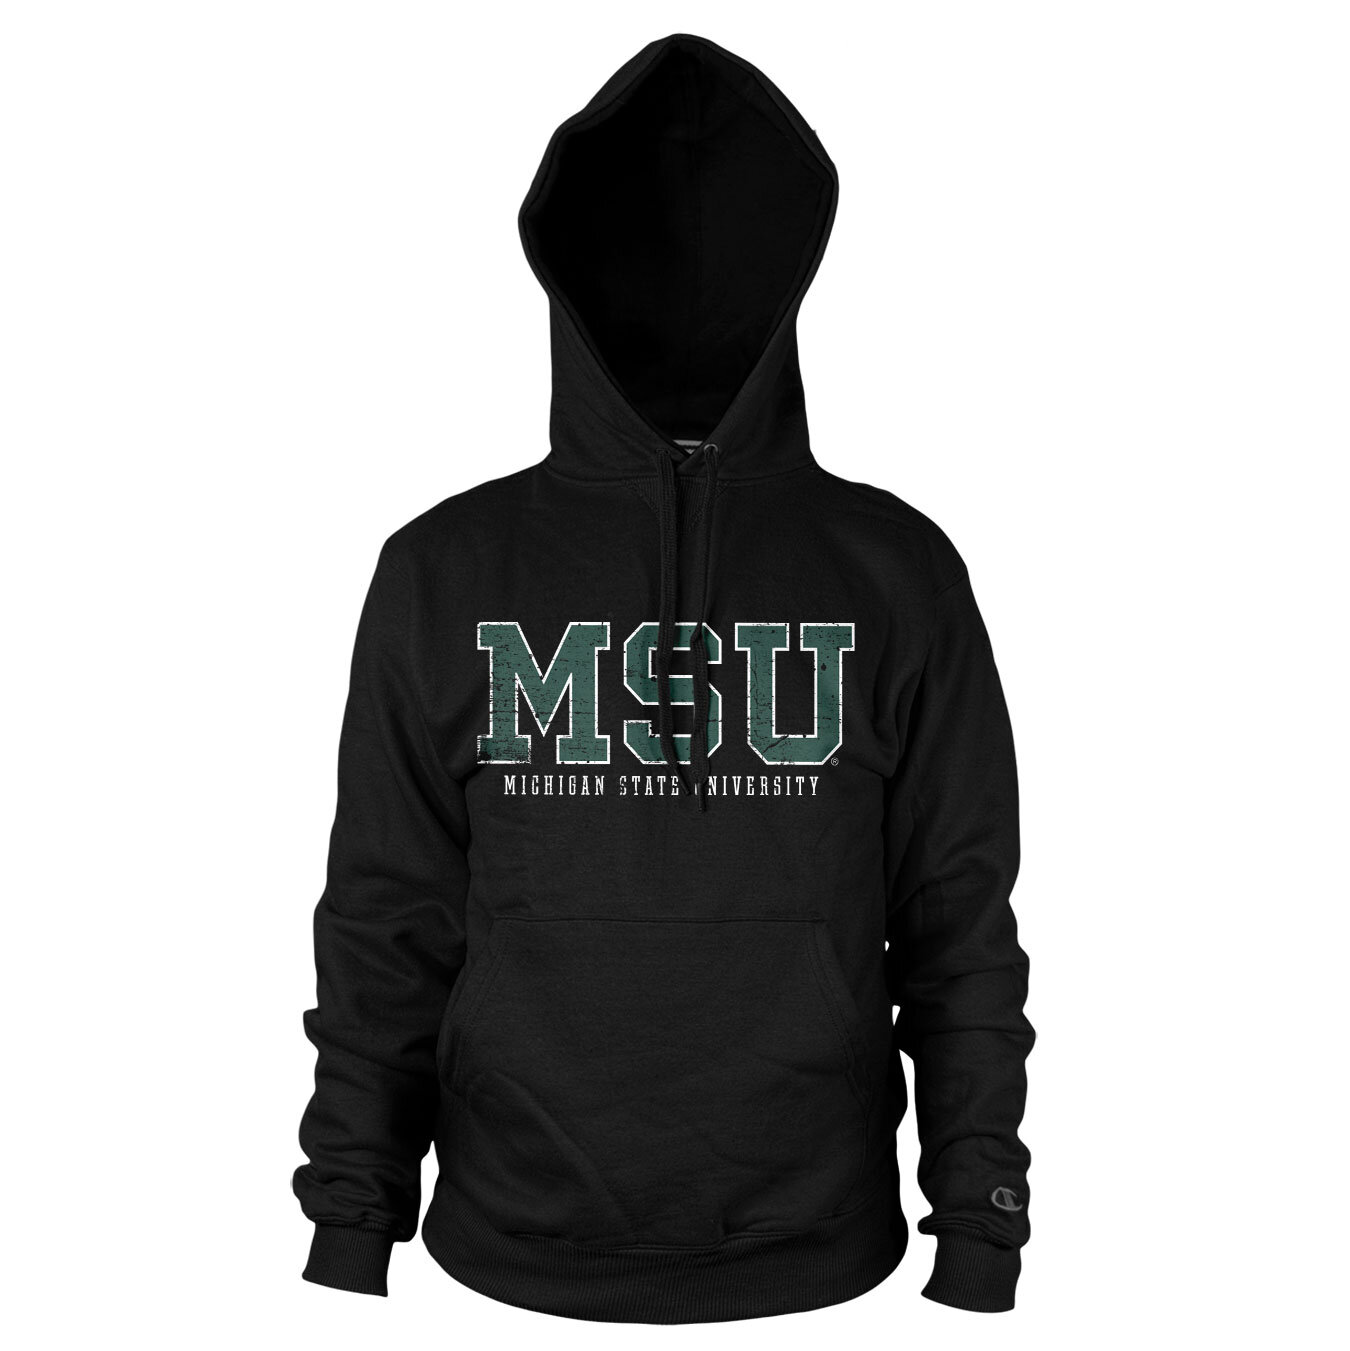 MSU - Michigan State University Hoodie